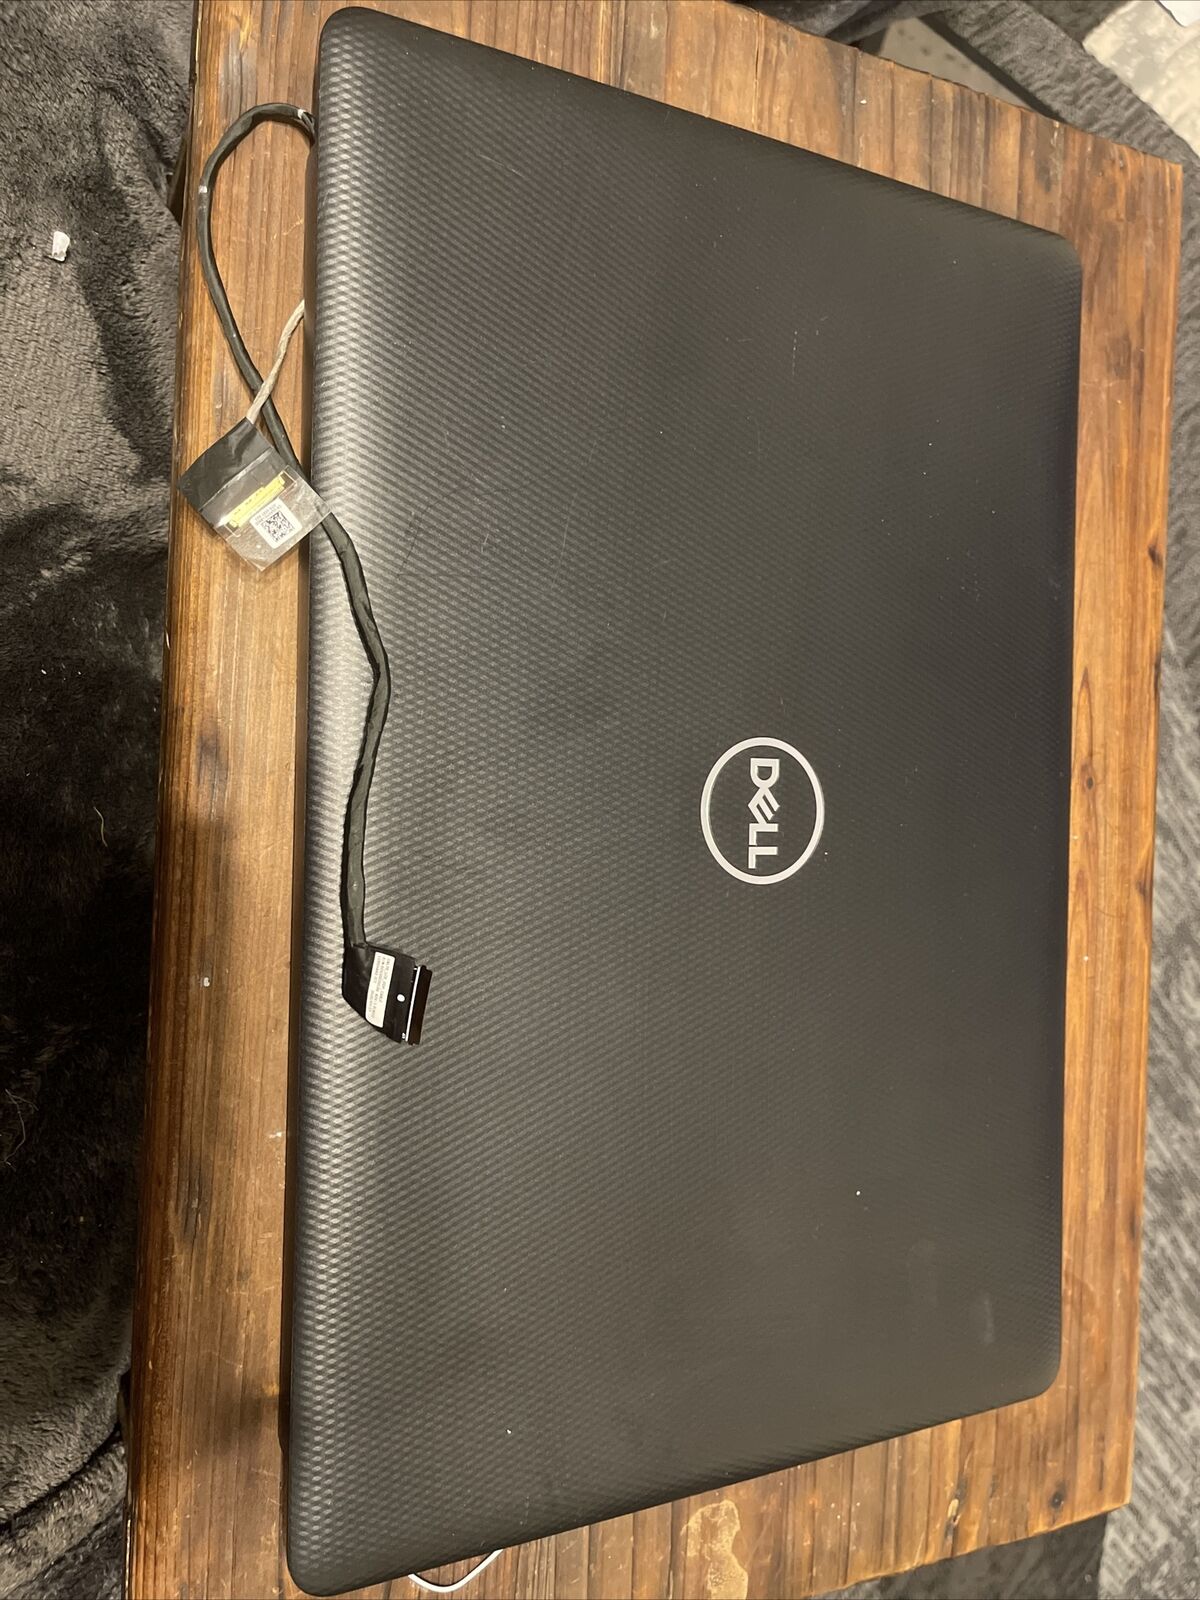 Genuine Dell Inspiron 15R 5521 15.6" Laptop LCD Back Cover Lid VMN9J 0VMN9J A1